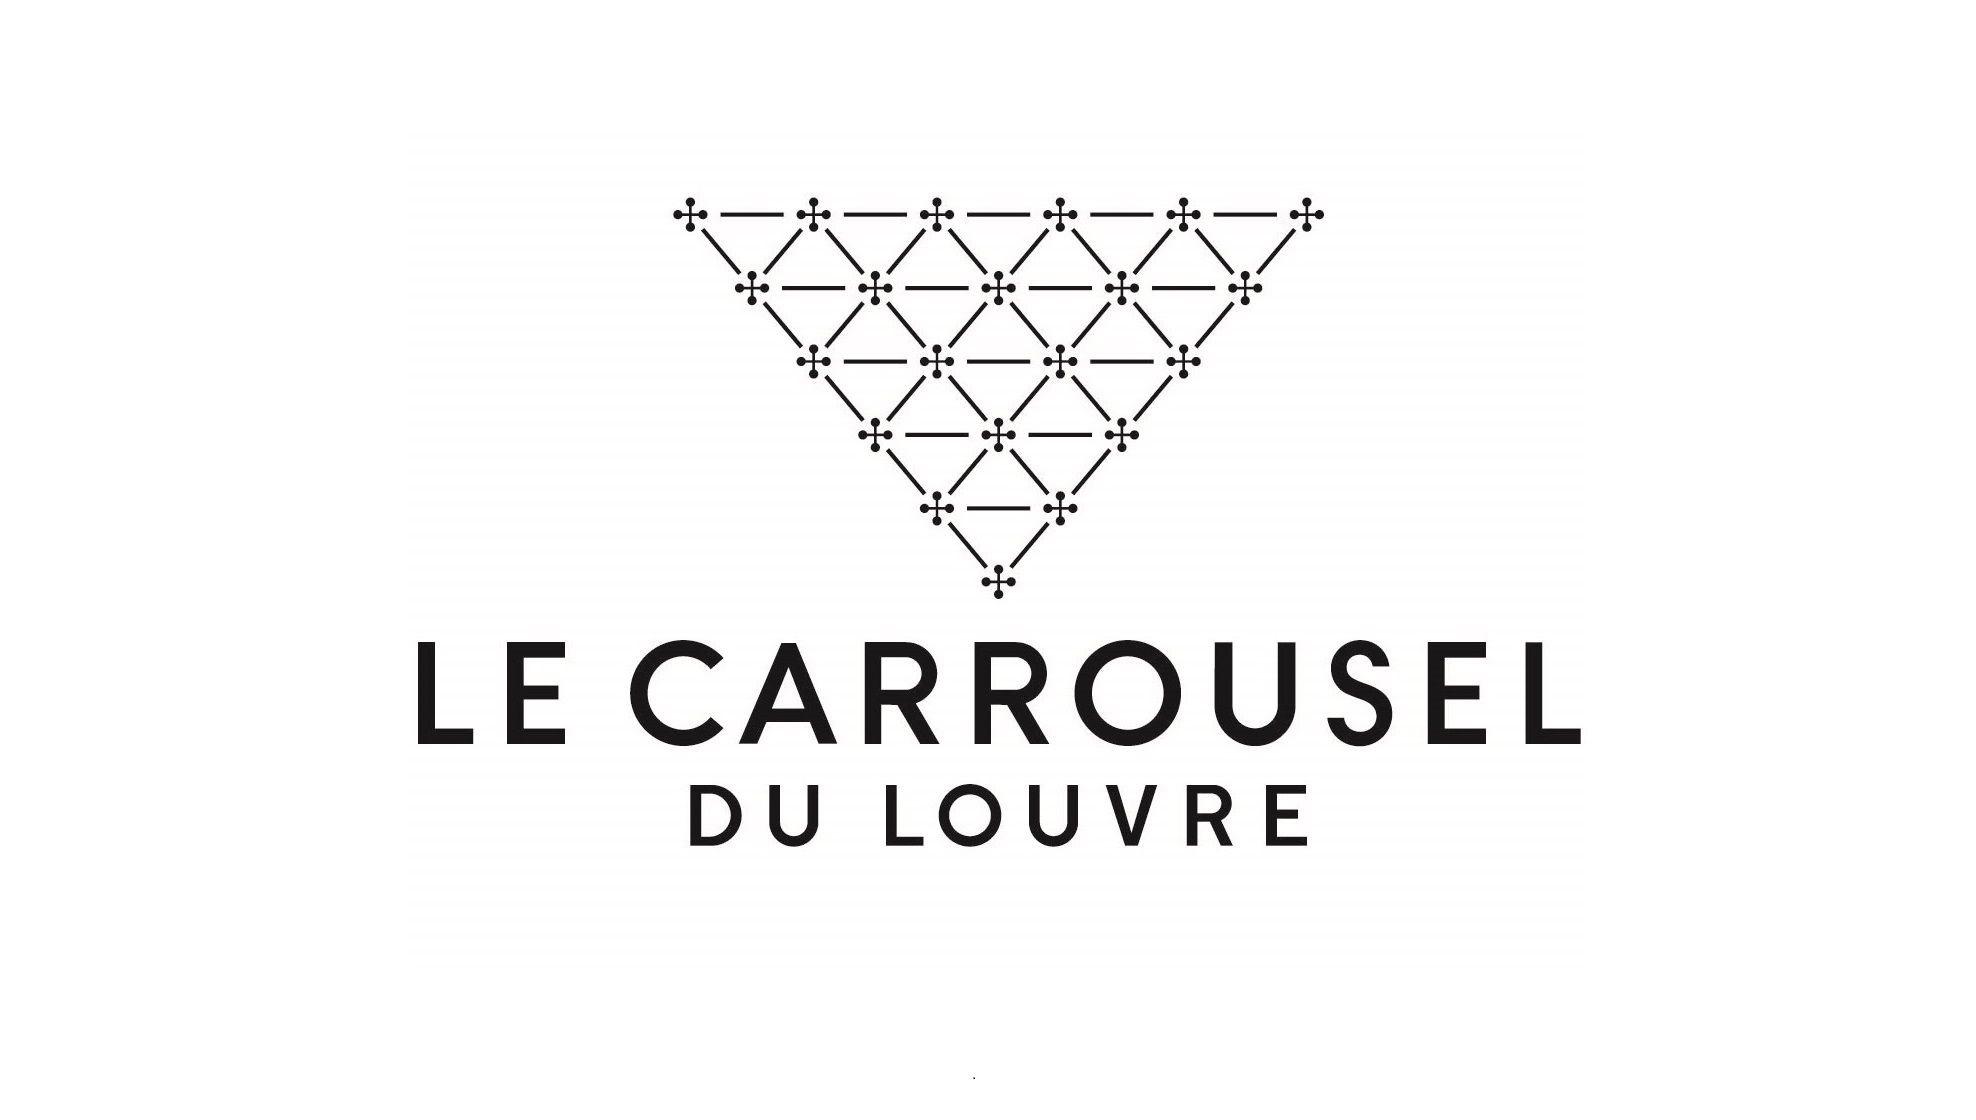 The Louvre Logo - CARROUSEL DU LOUVRE